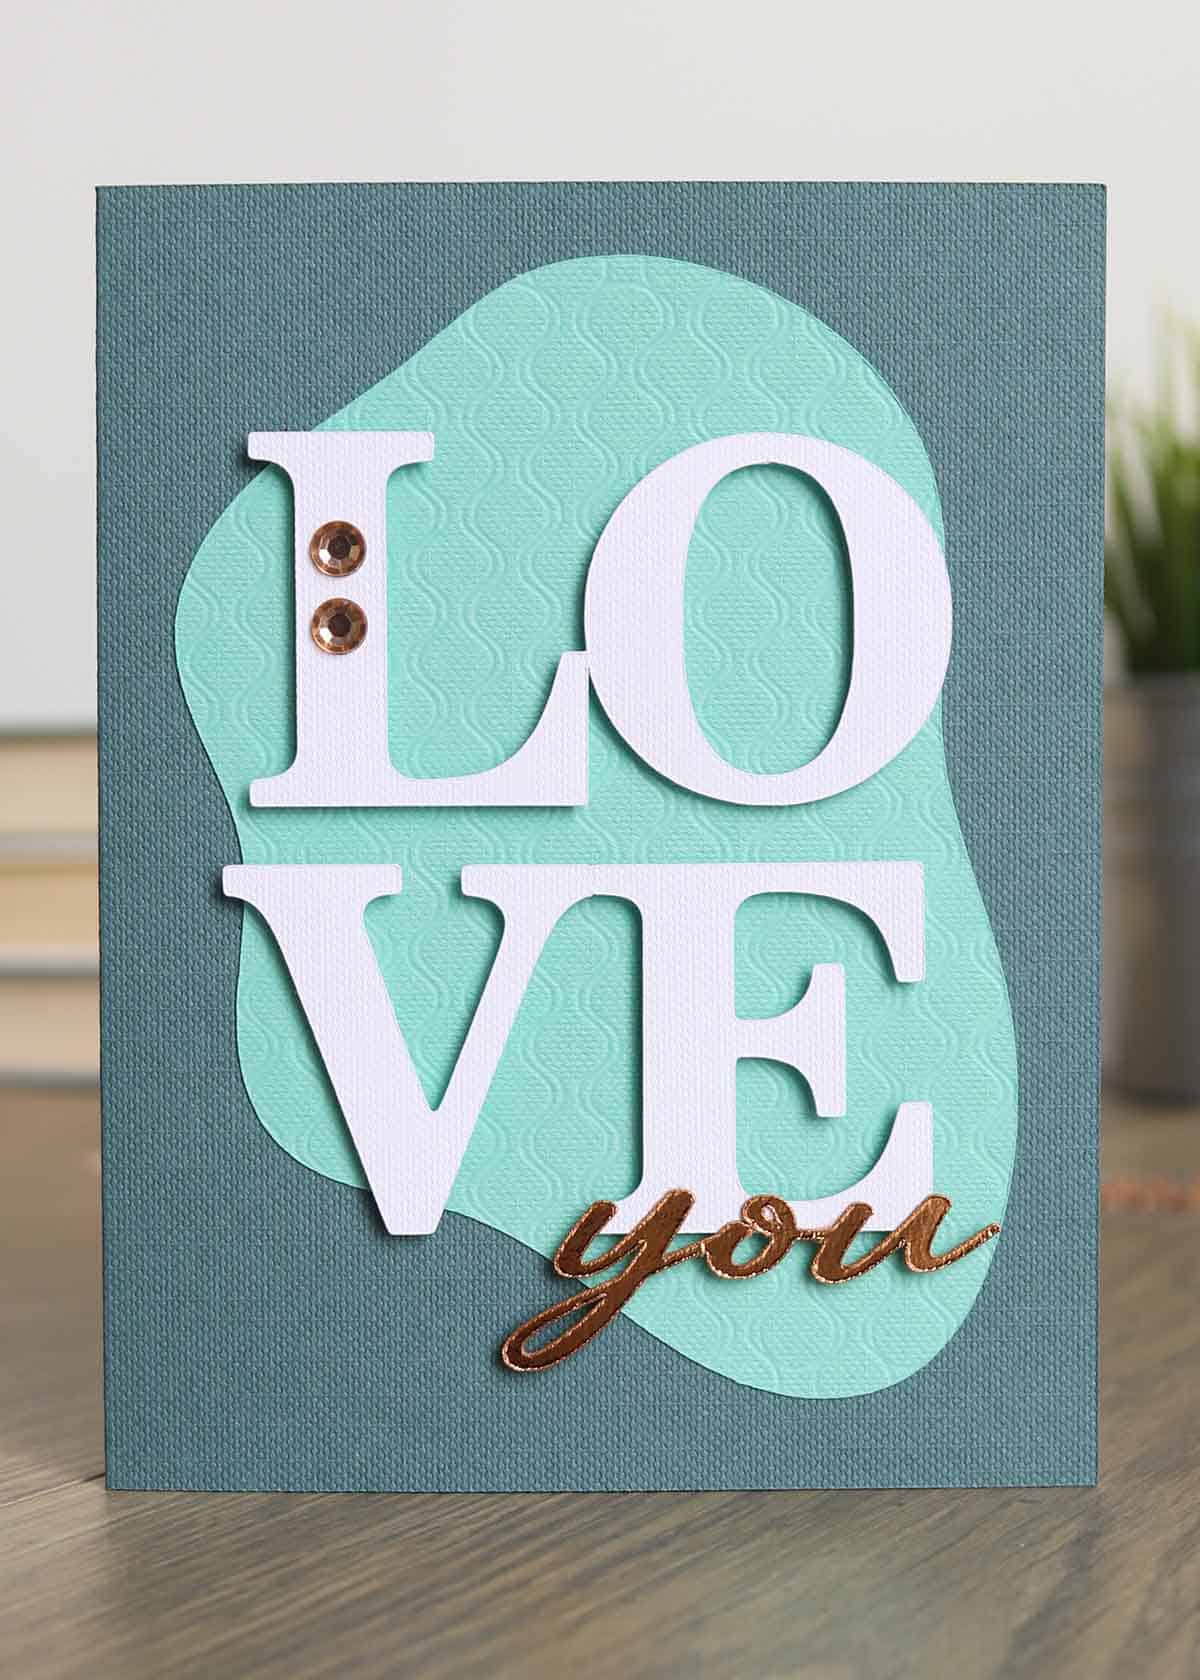 cricut valentines day card ideas: debossing tool Cricut "love you" card